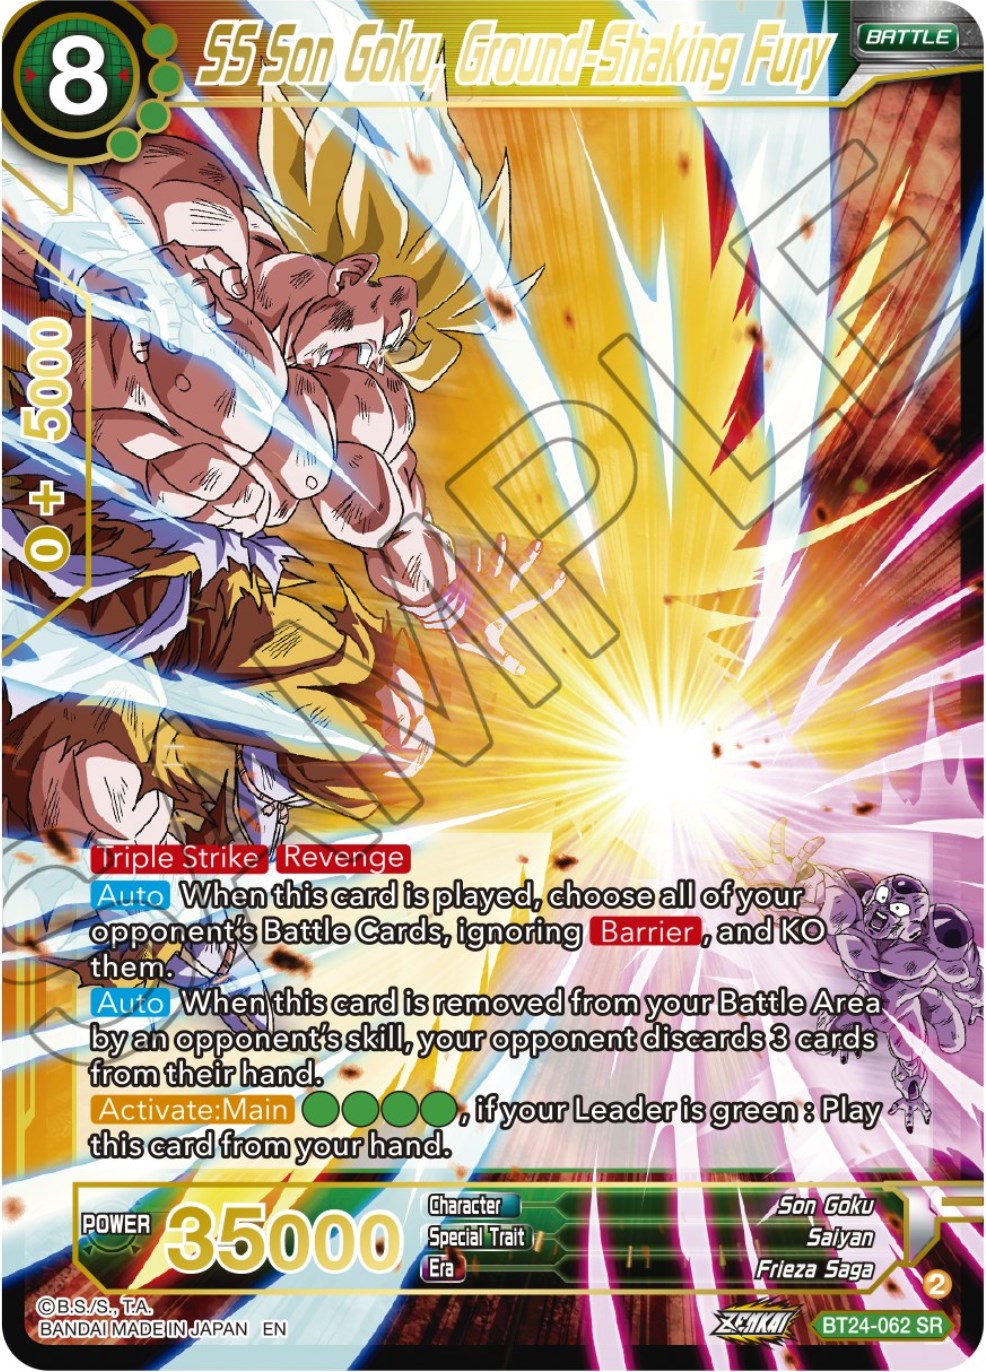 SS Son Goku, Ground-Shaking Fury (BT24-062) [Beyond Generations]